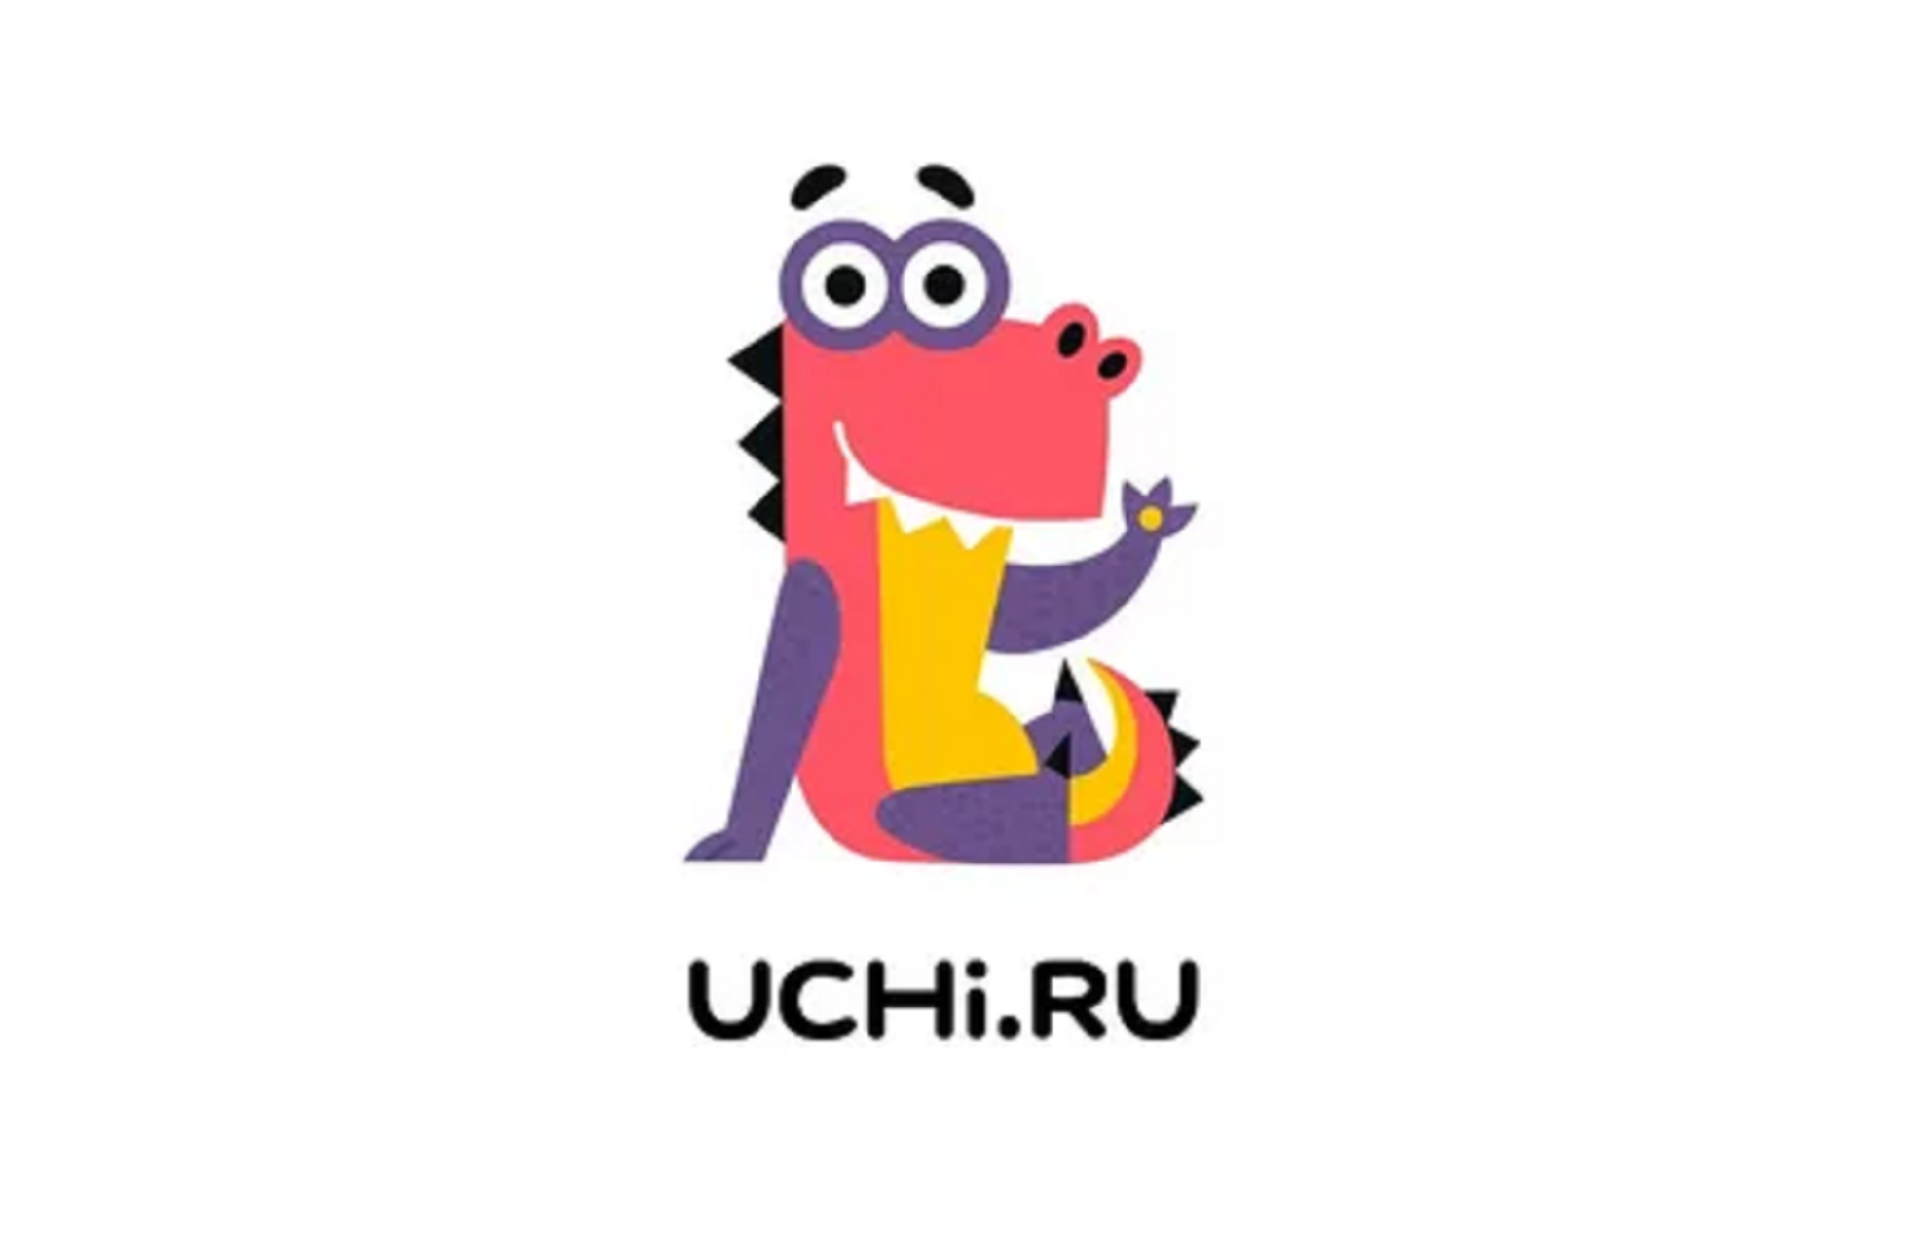 Телефоне uchi ru. Учи ру. Учи ру логотип. Сфучи ру. Заврики.